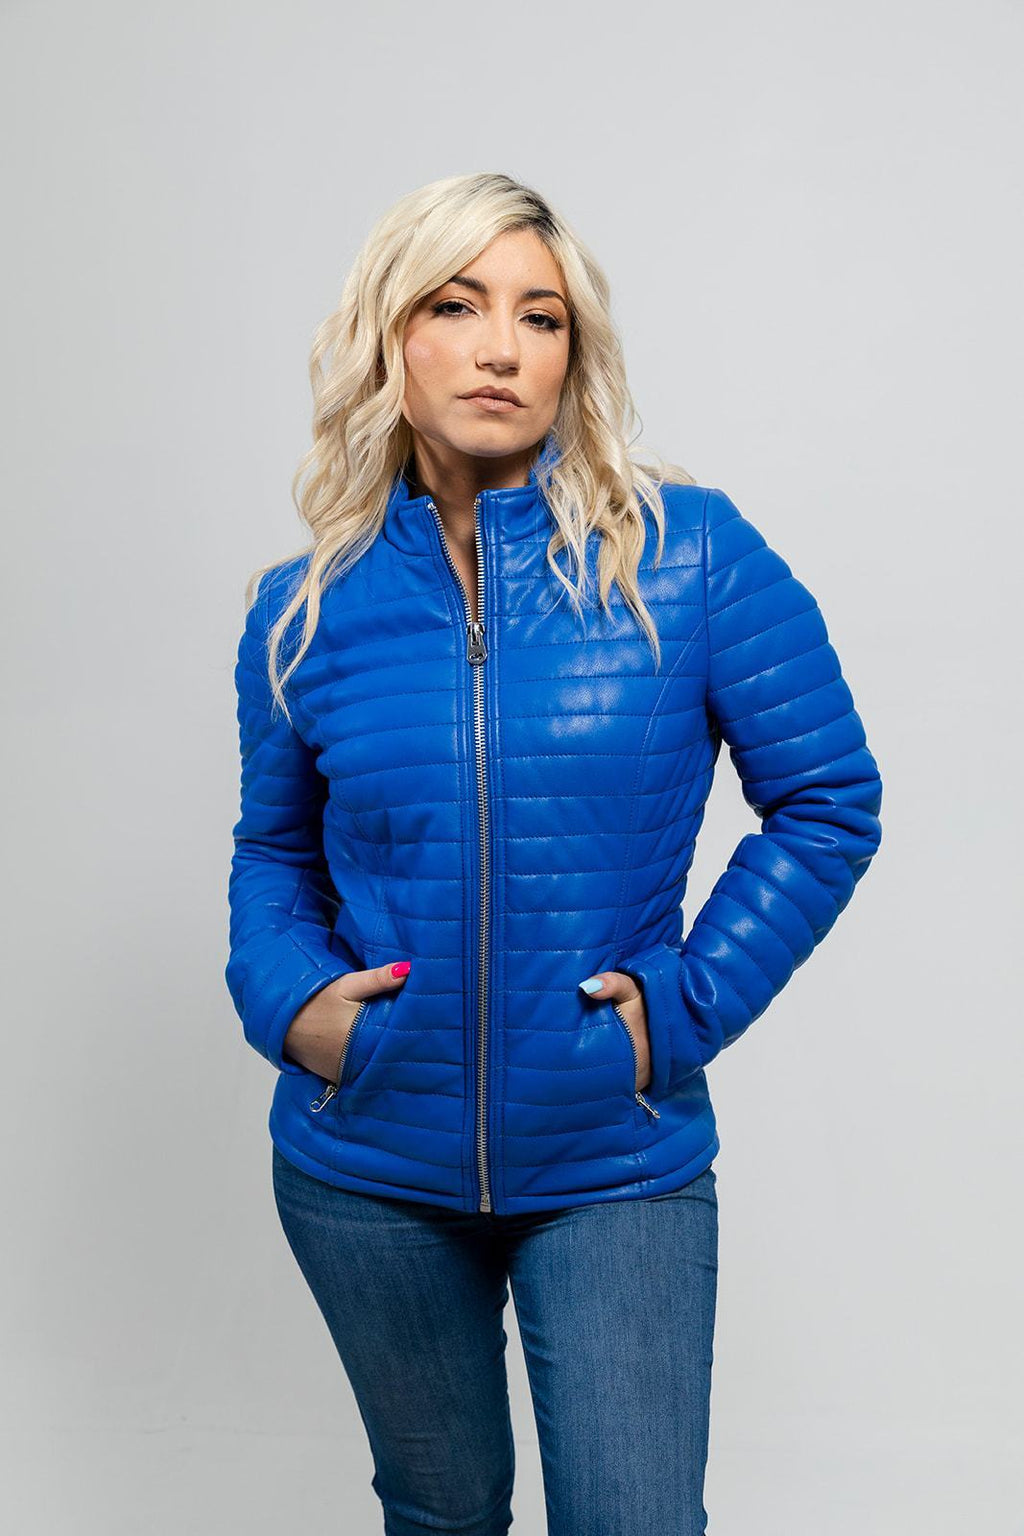 Skylar Women's Vegan Faux Leather Jacket Women's Fashion Leather Jacket Whet Blu NYC Blue XS 